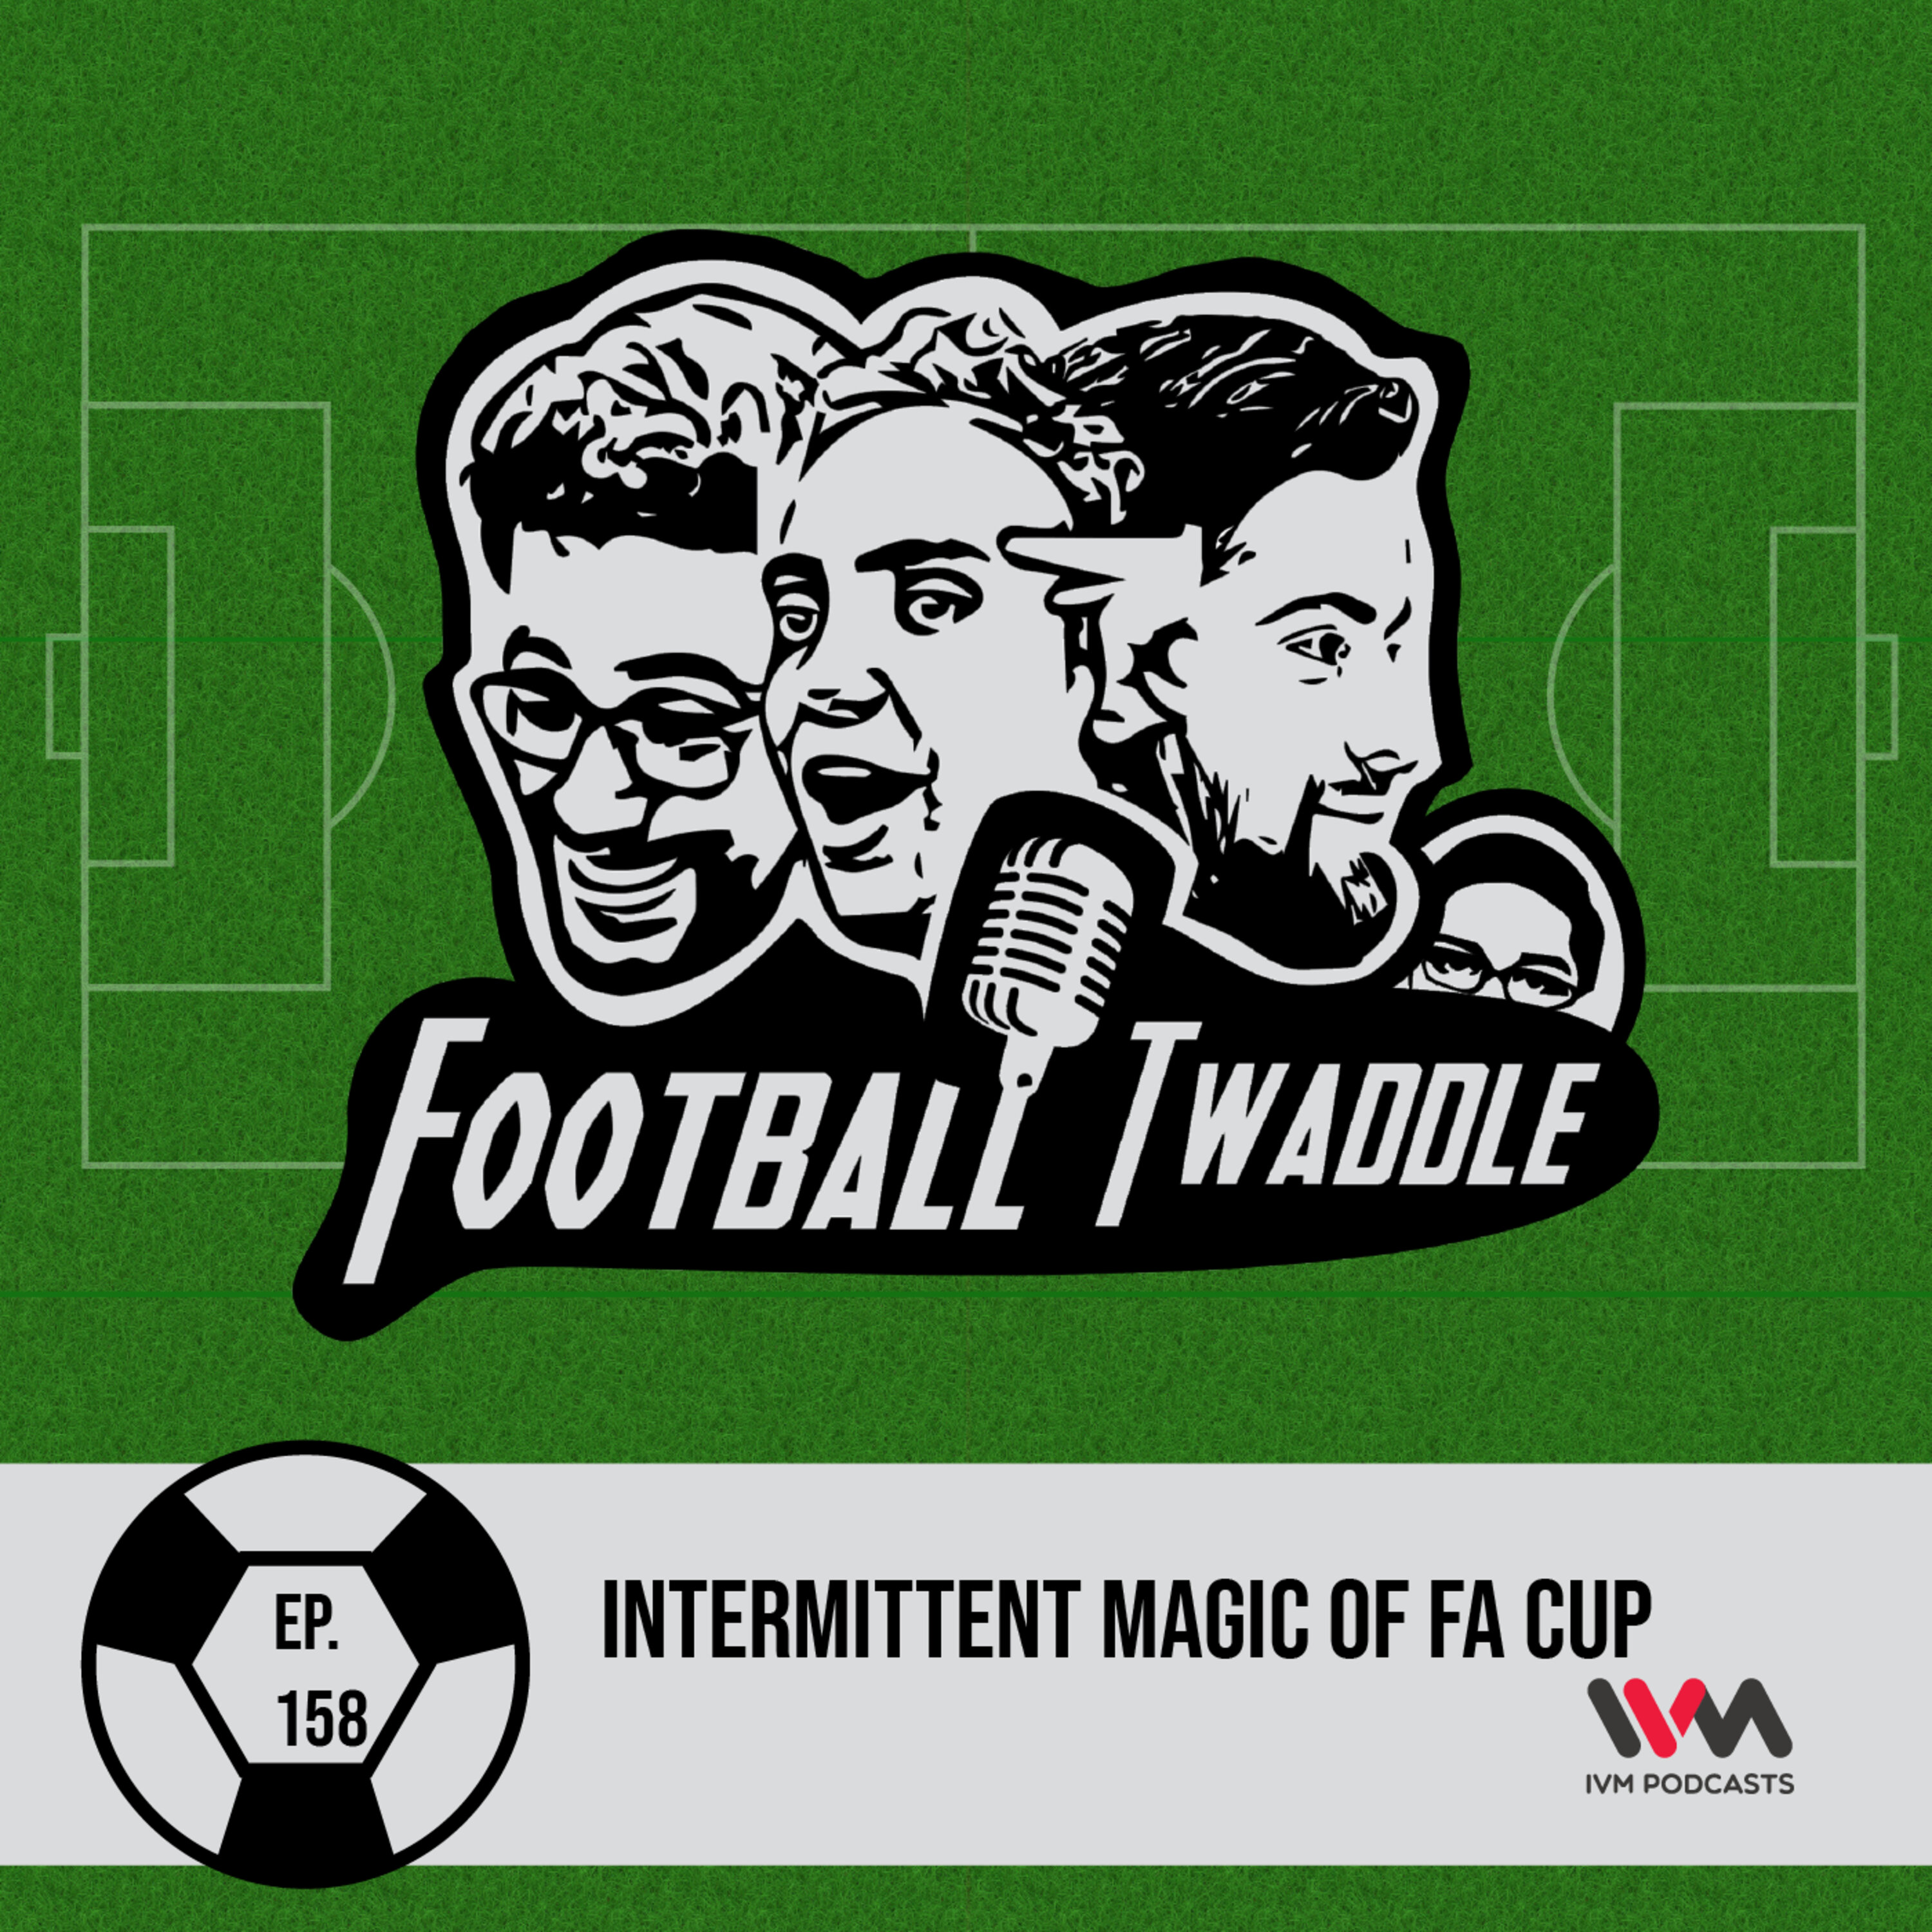 Intermittent magic of FA Cup